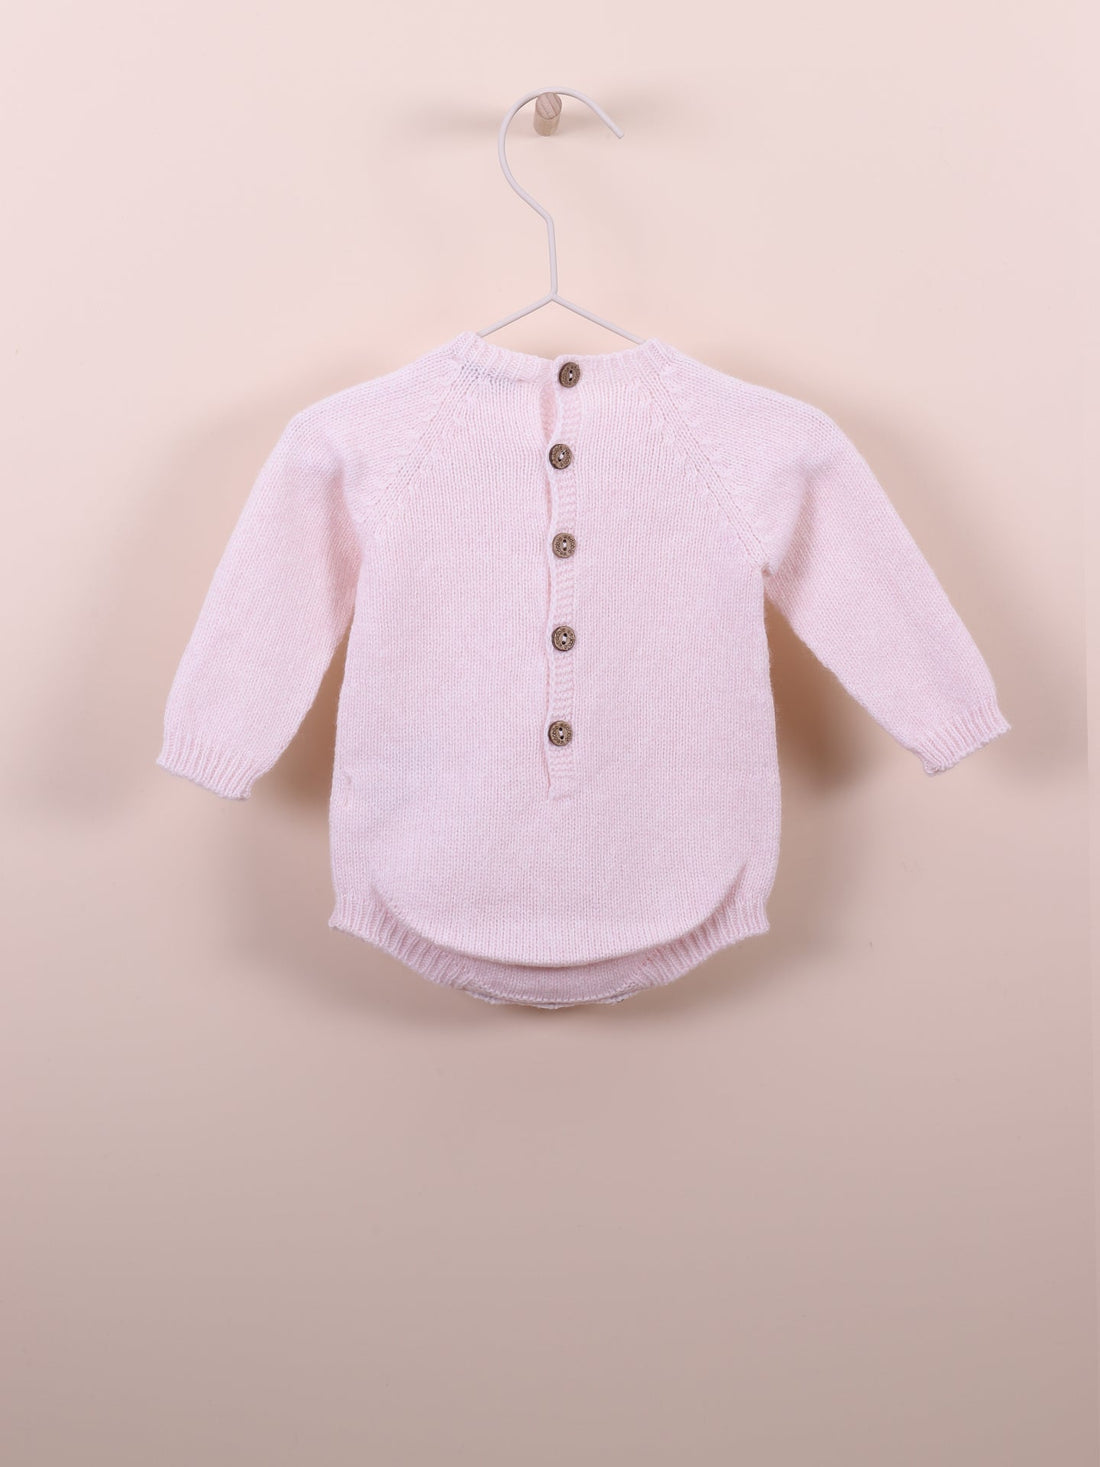 Cottontail Cashmere Knit Romper- Ballet Pink